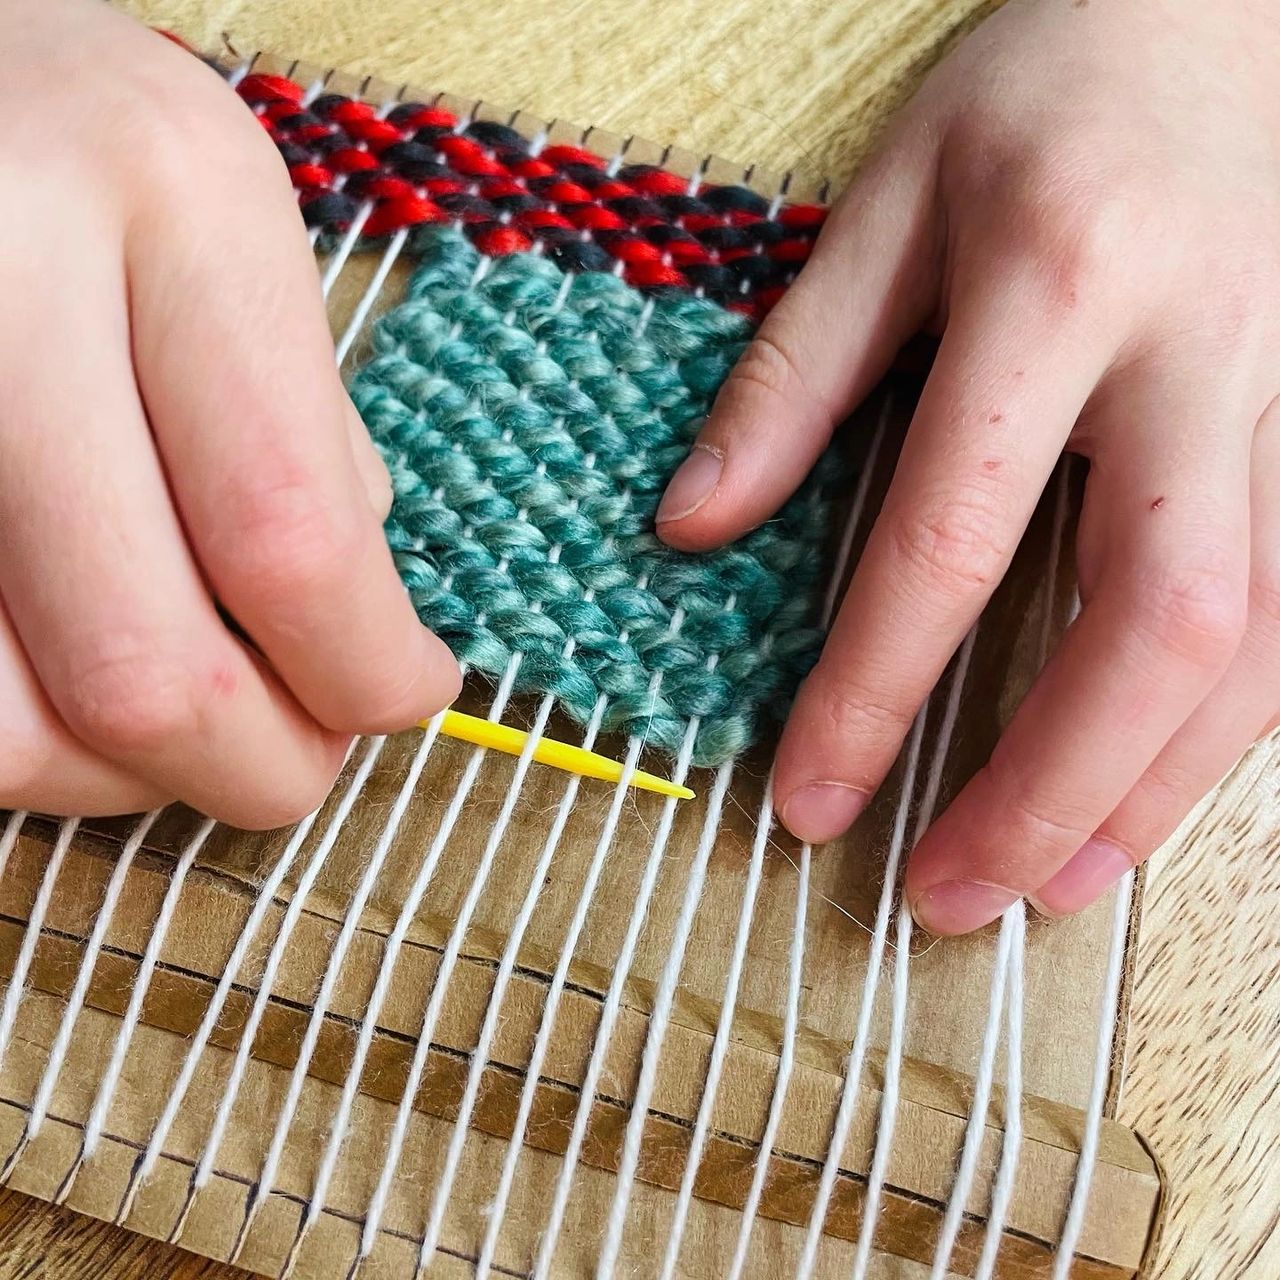 How To Make a DIY Mini Loom  Weaving loom projects, Weaving loom